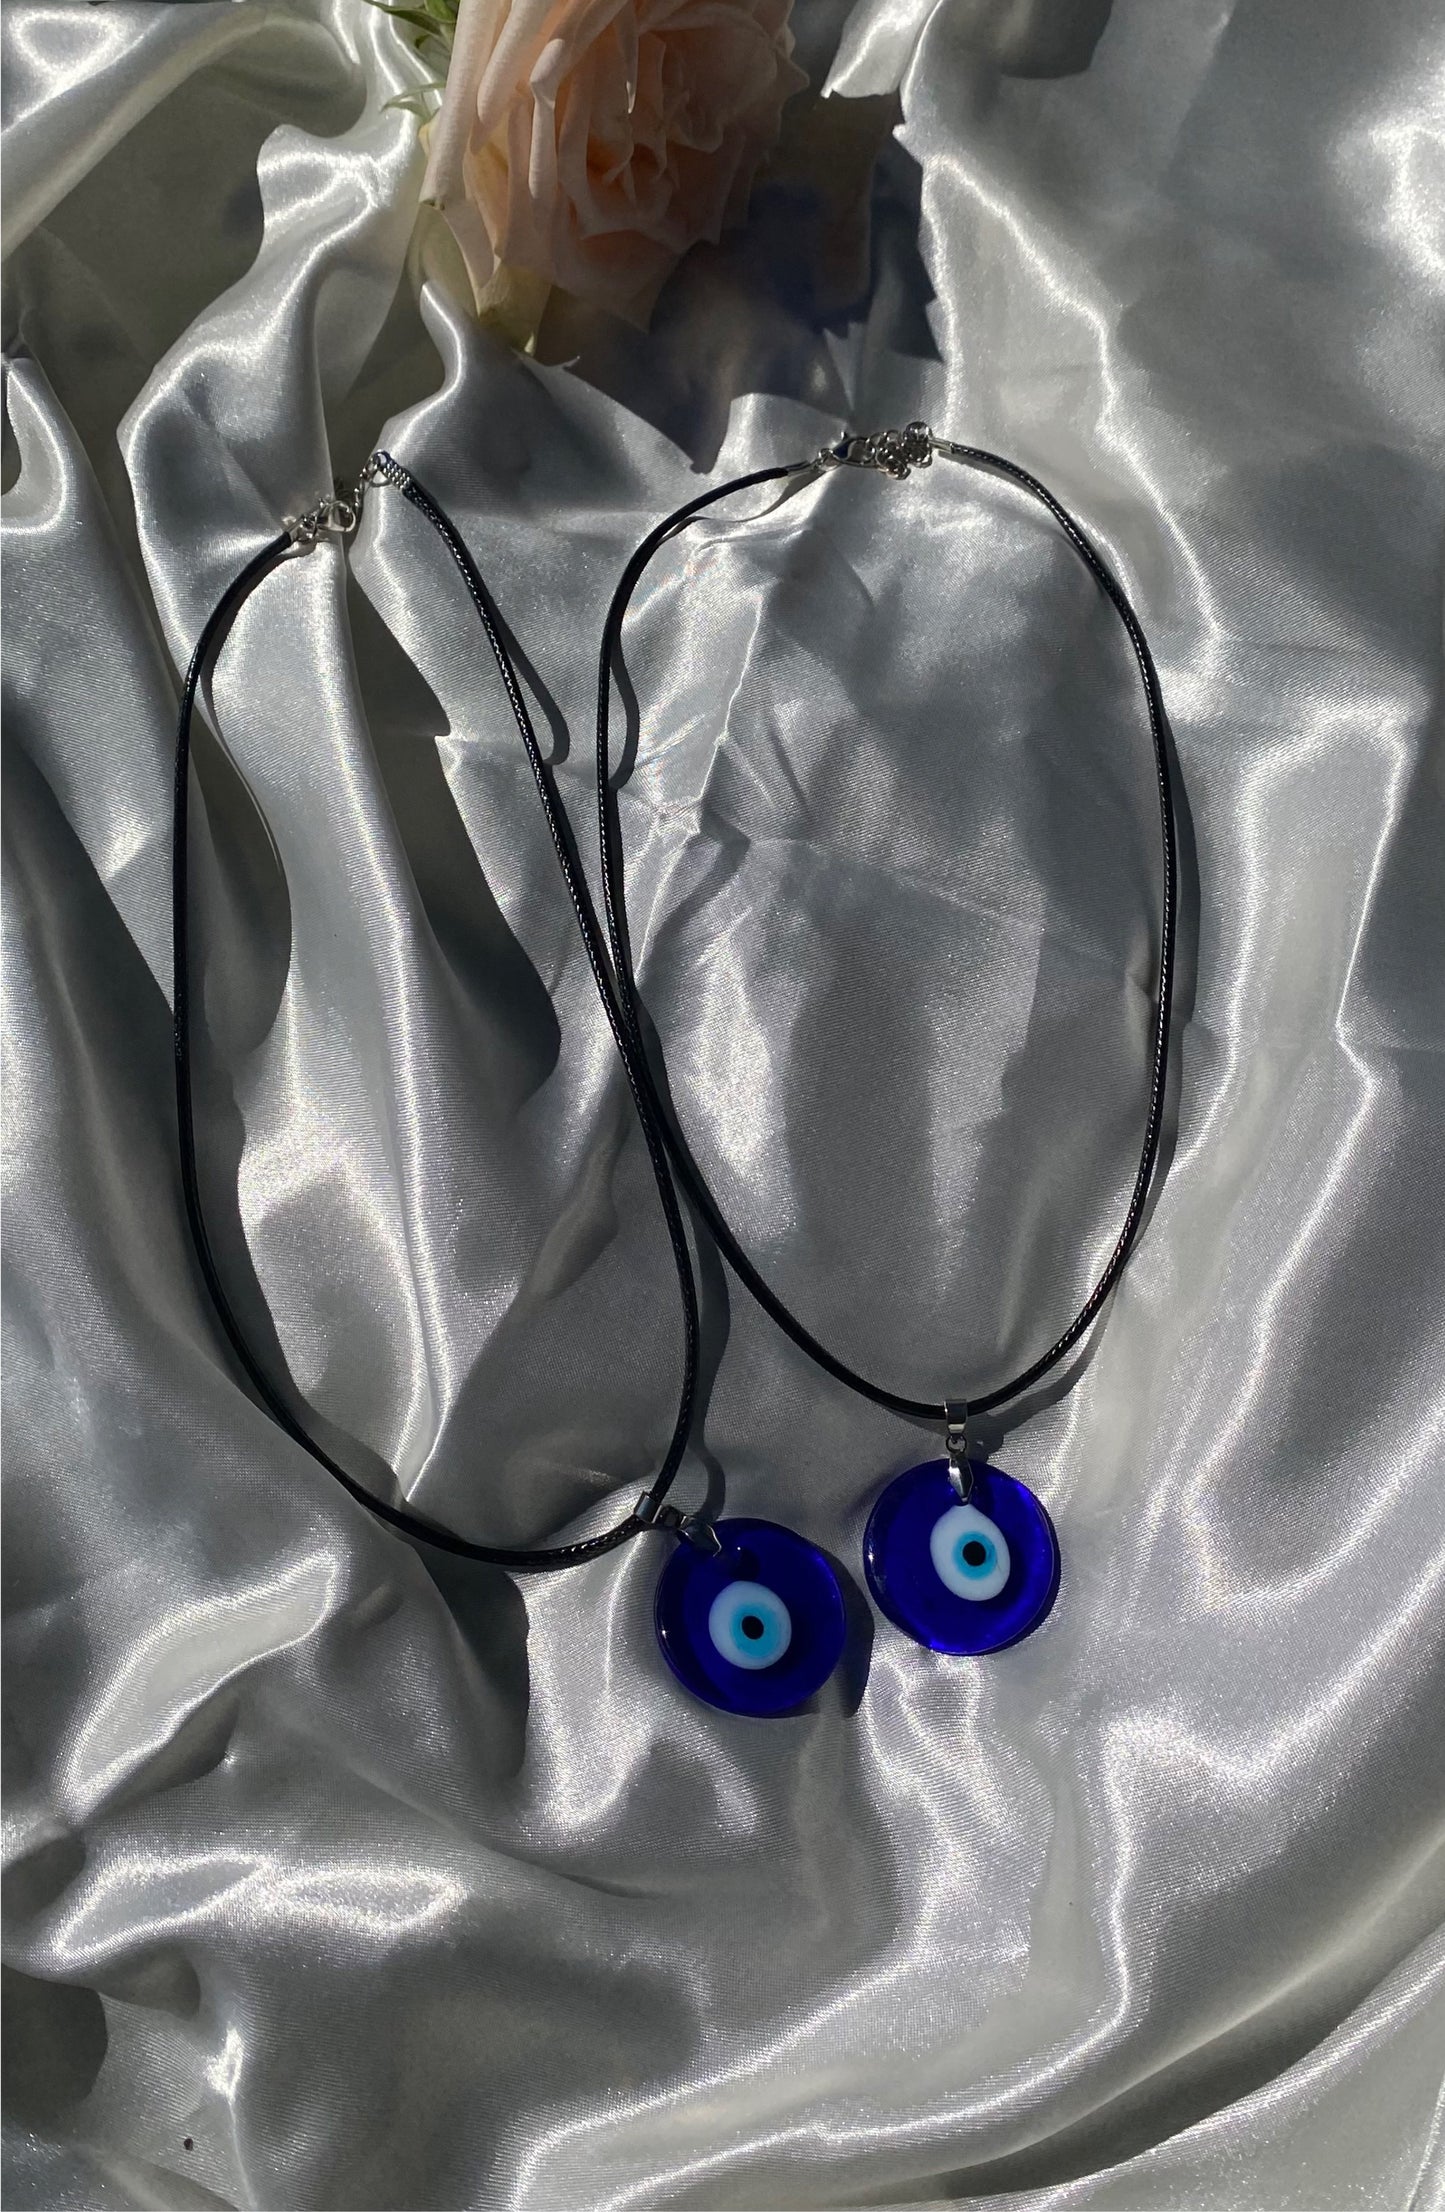 evil eye pendant necklace